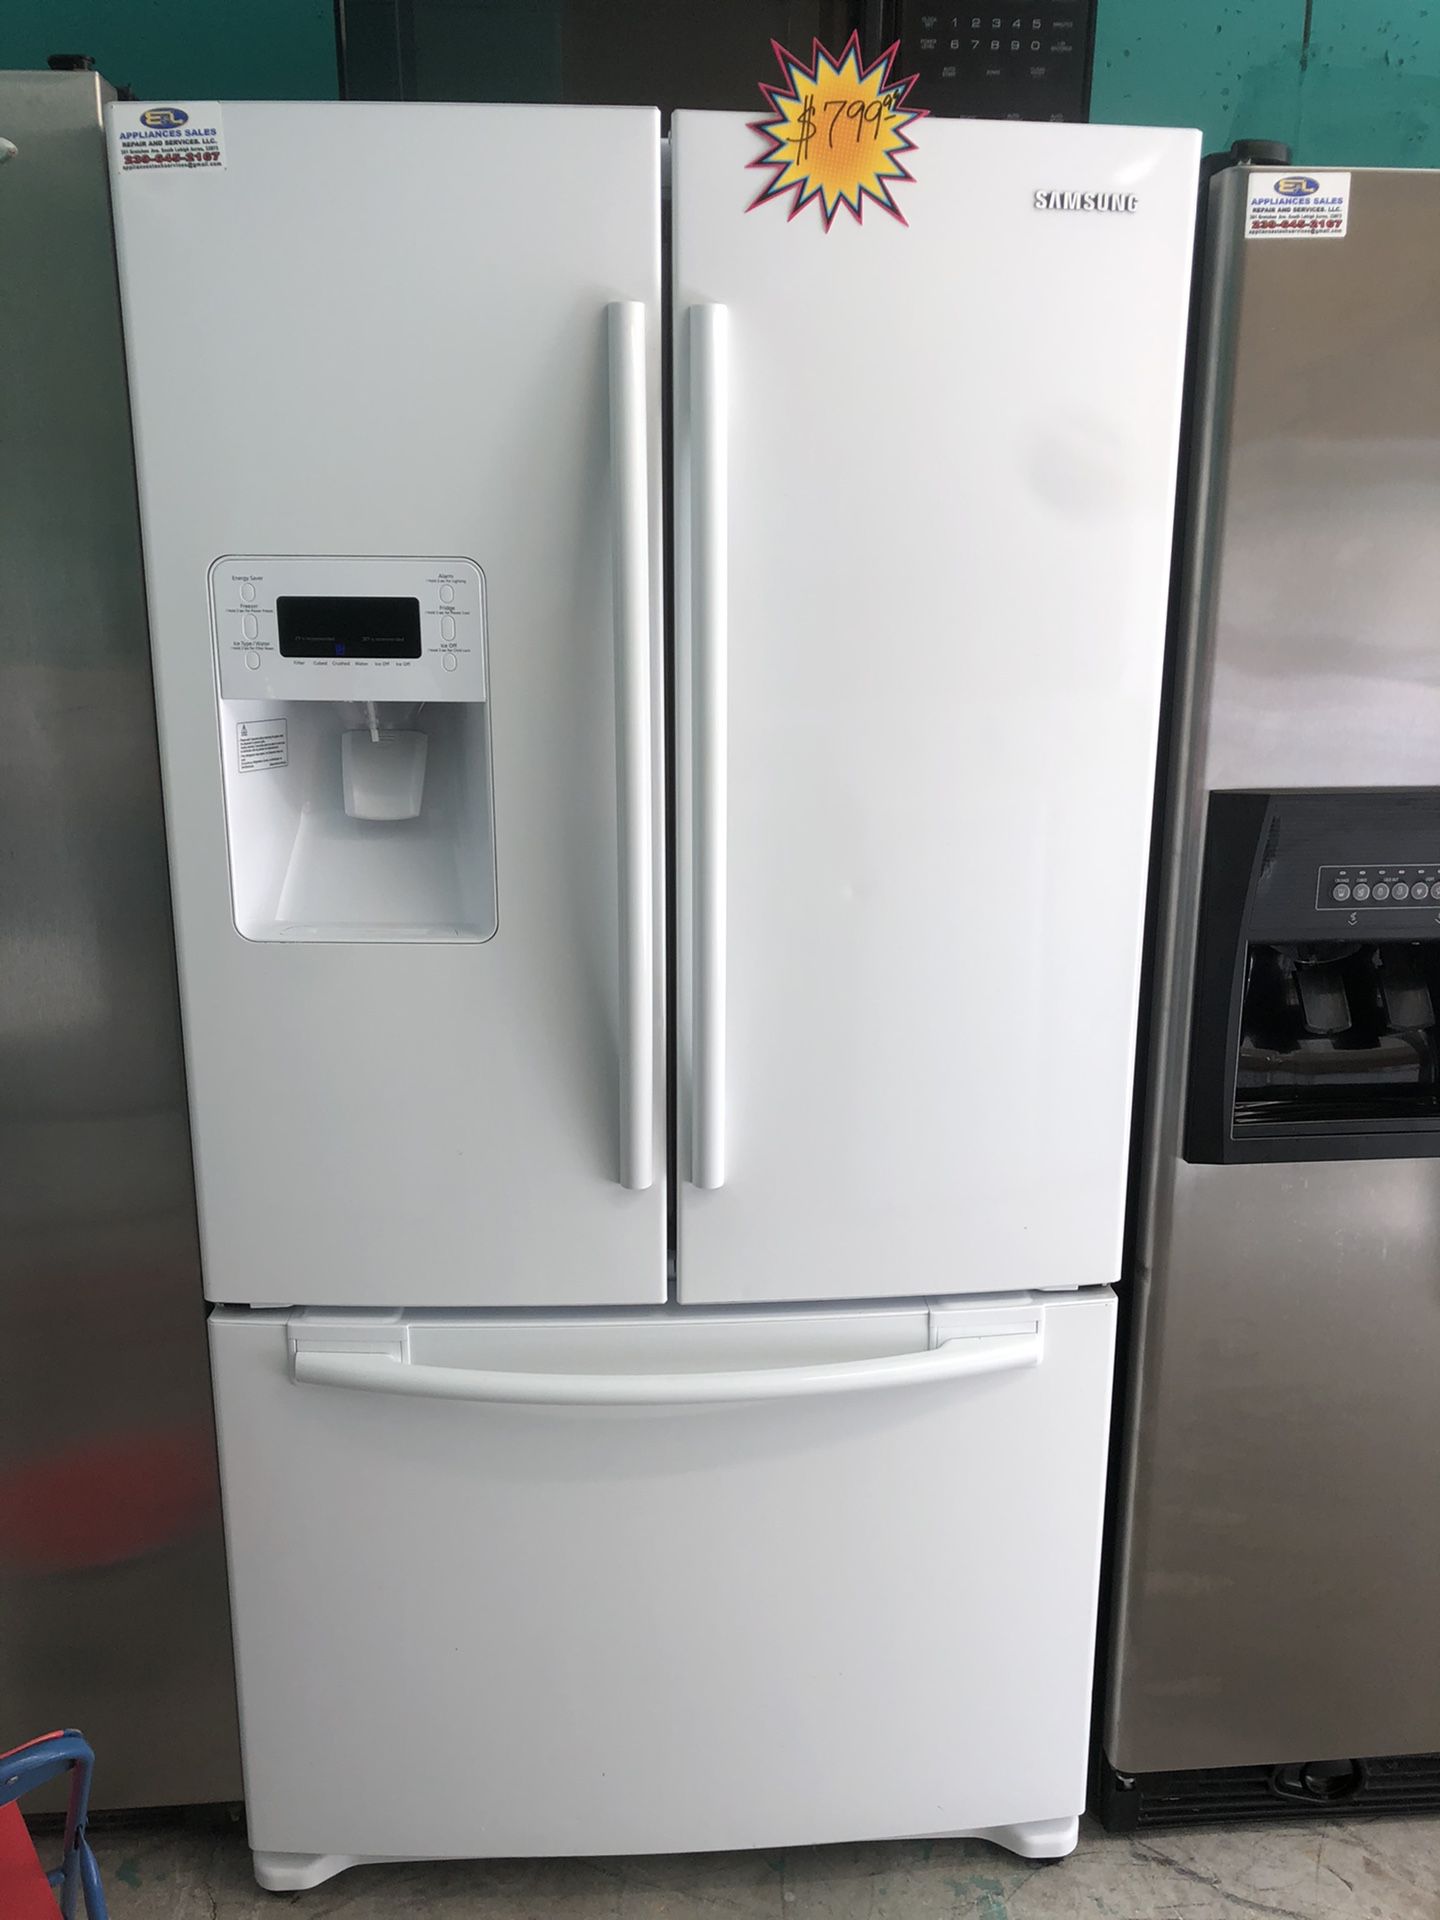 A Samsung White French door Refrigerator